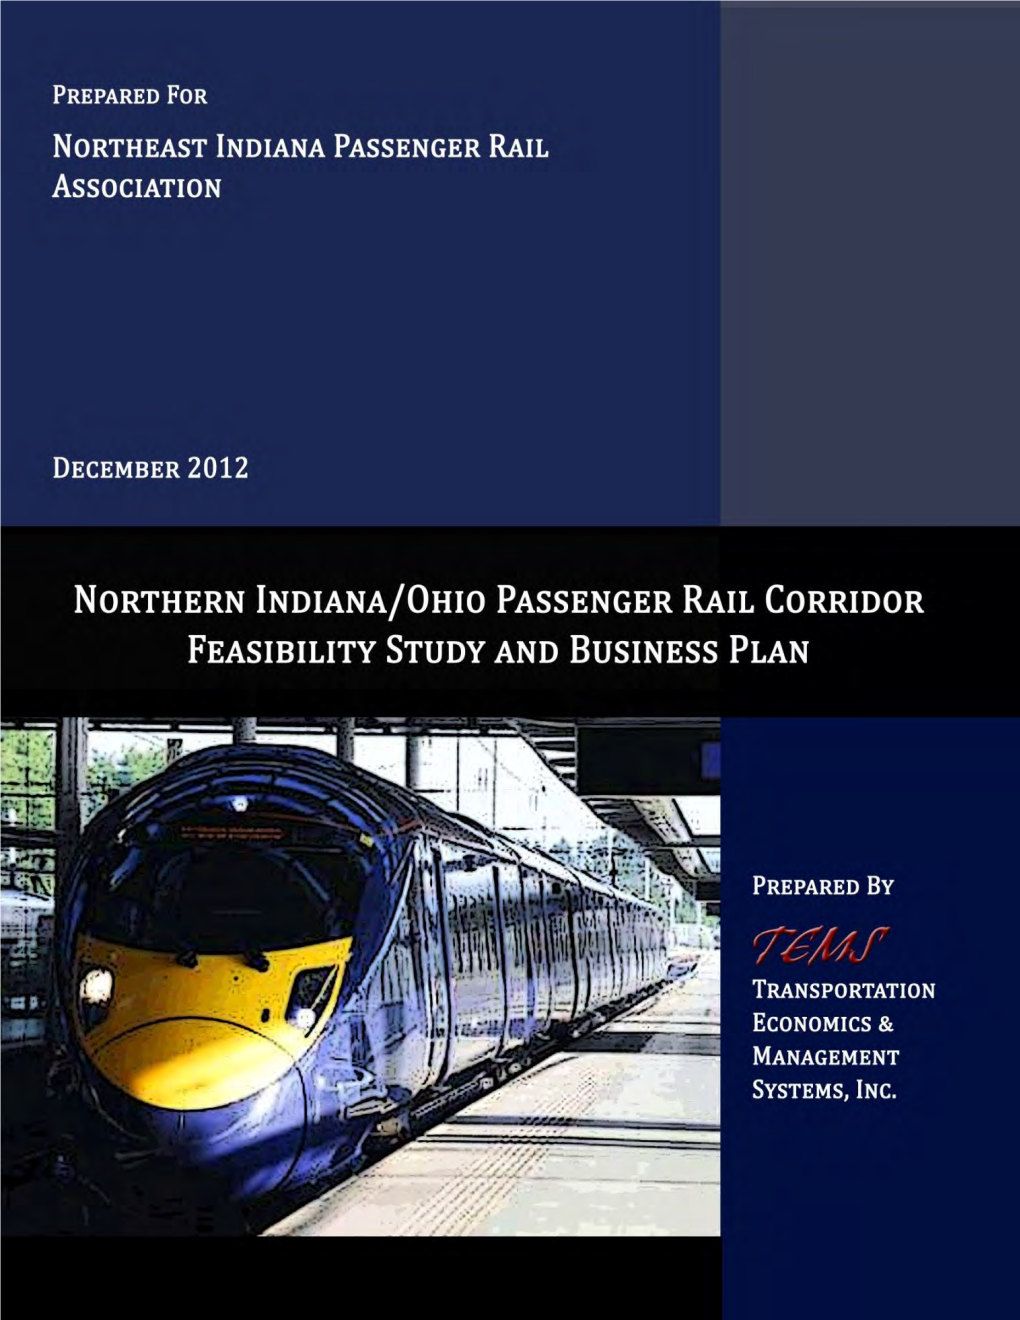 Northern Indiana Ohio Passenger Rail Corridor Feasibility Study And